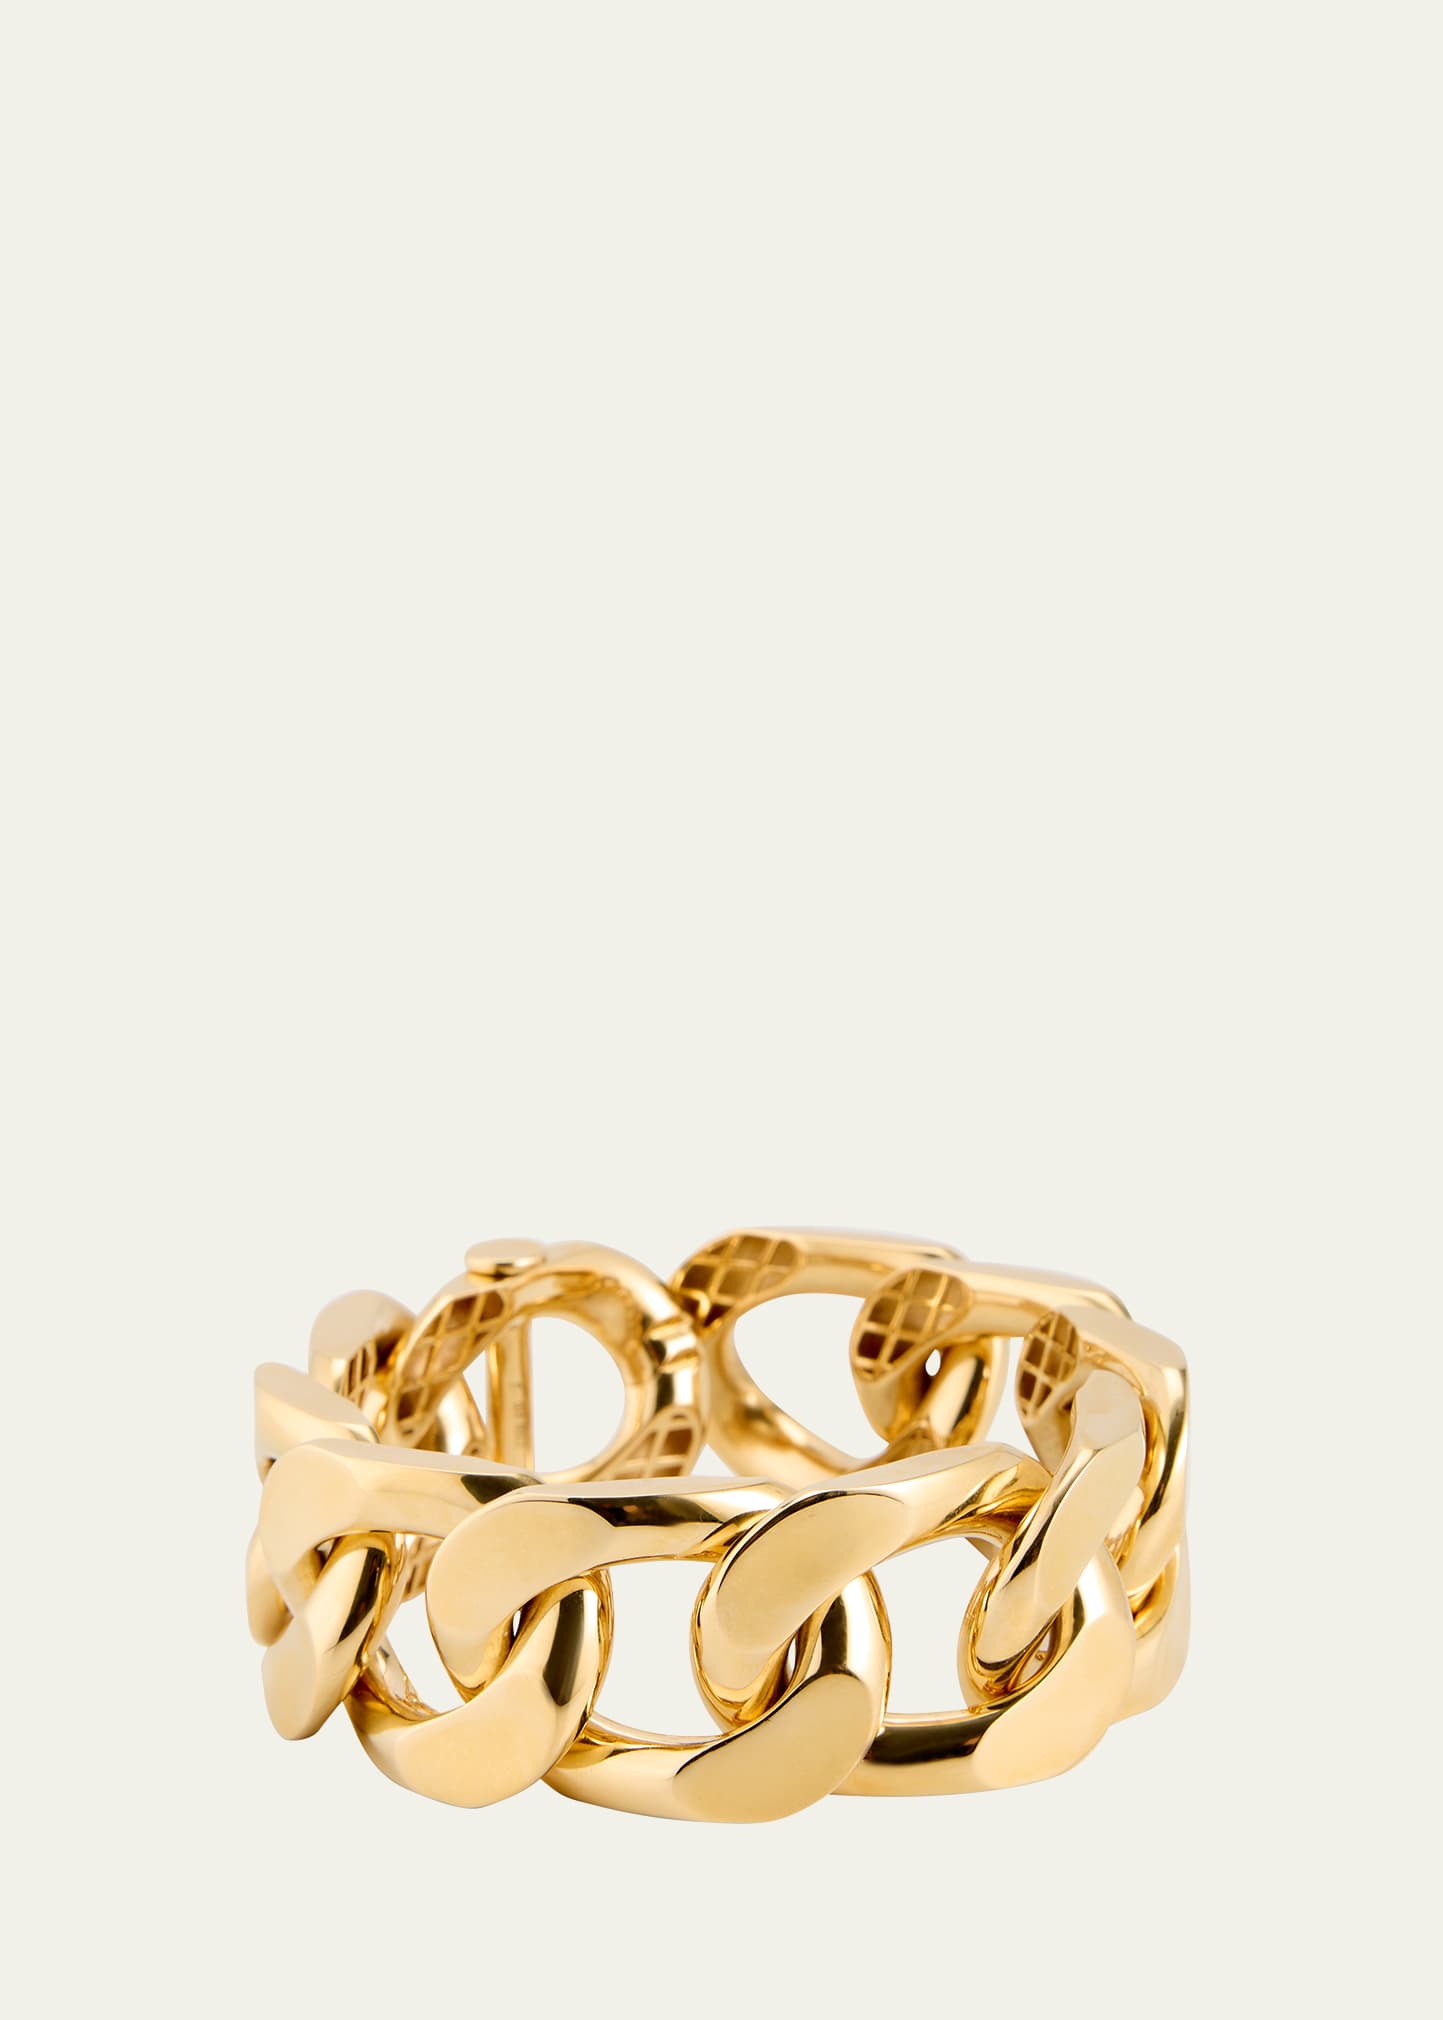 New York 66 Bracelet, Big, in Yellow Gold, 10 links